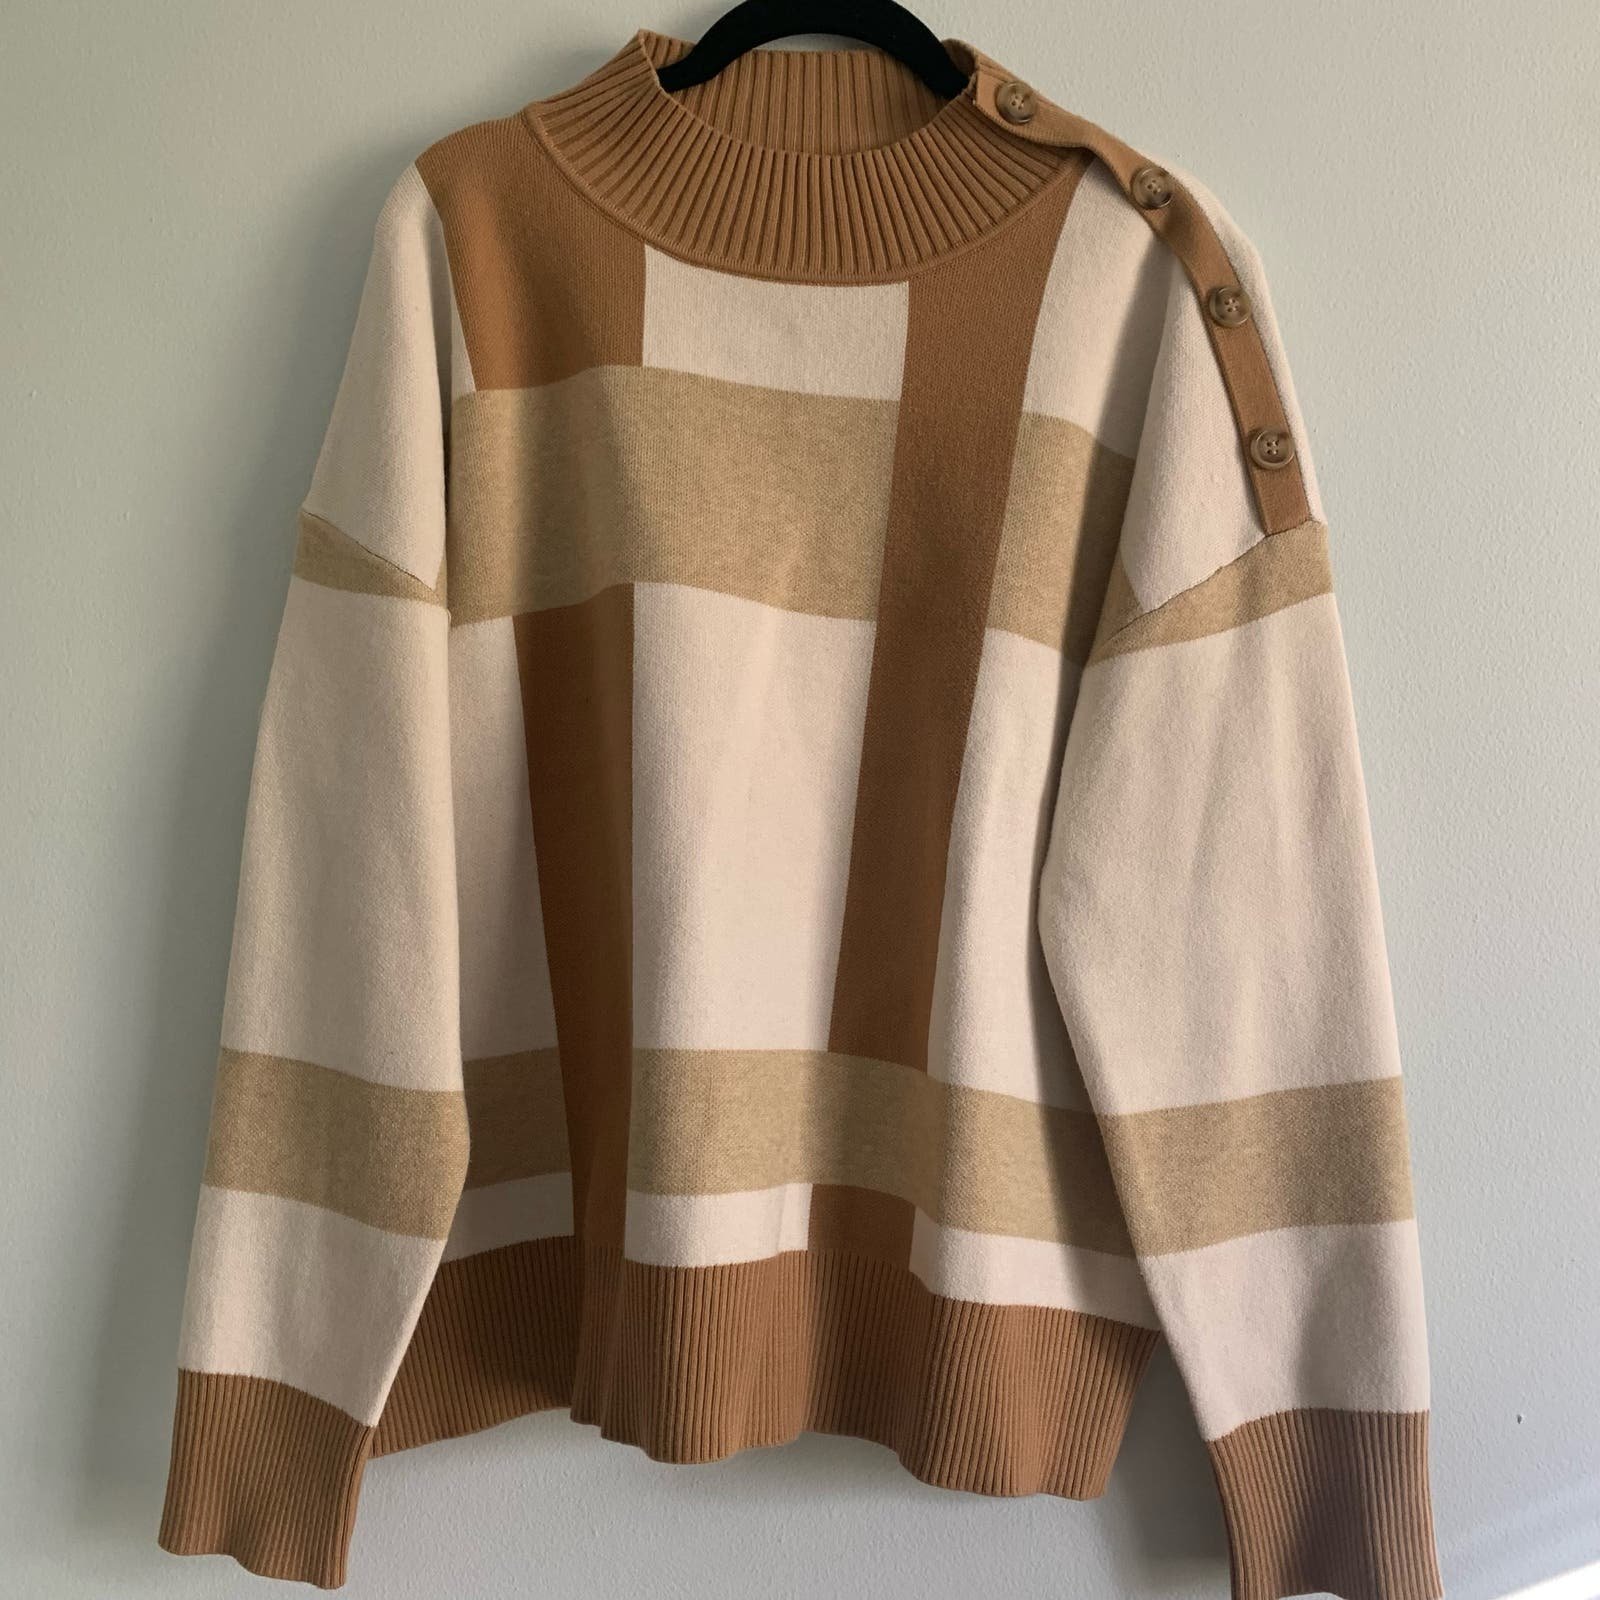 high discount Tahari colorblock sweater fvSeyEgKb Discount